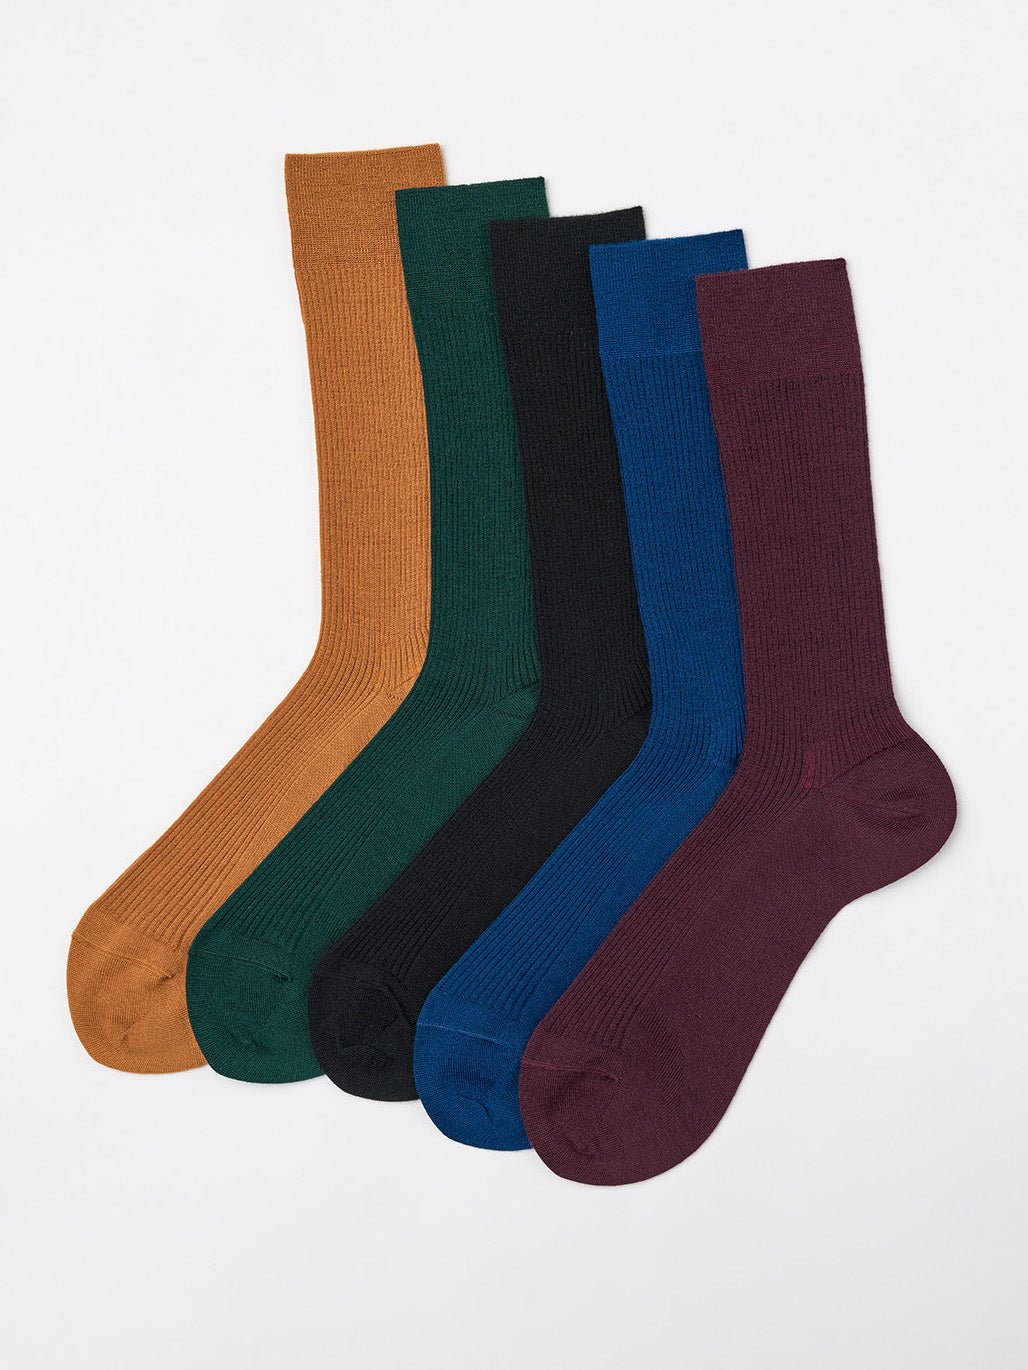 Classy Socks Merino Wool Brown